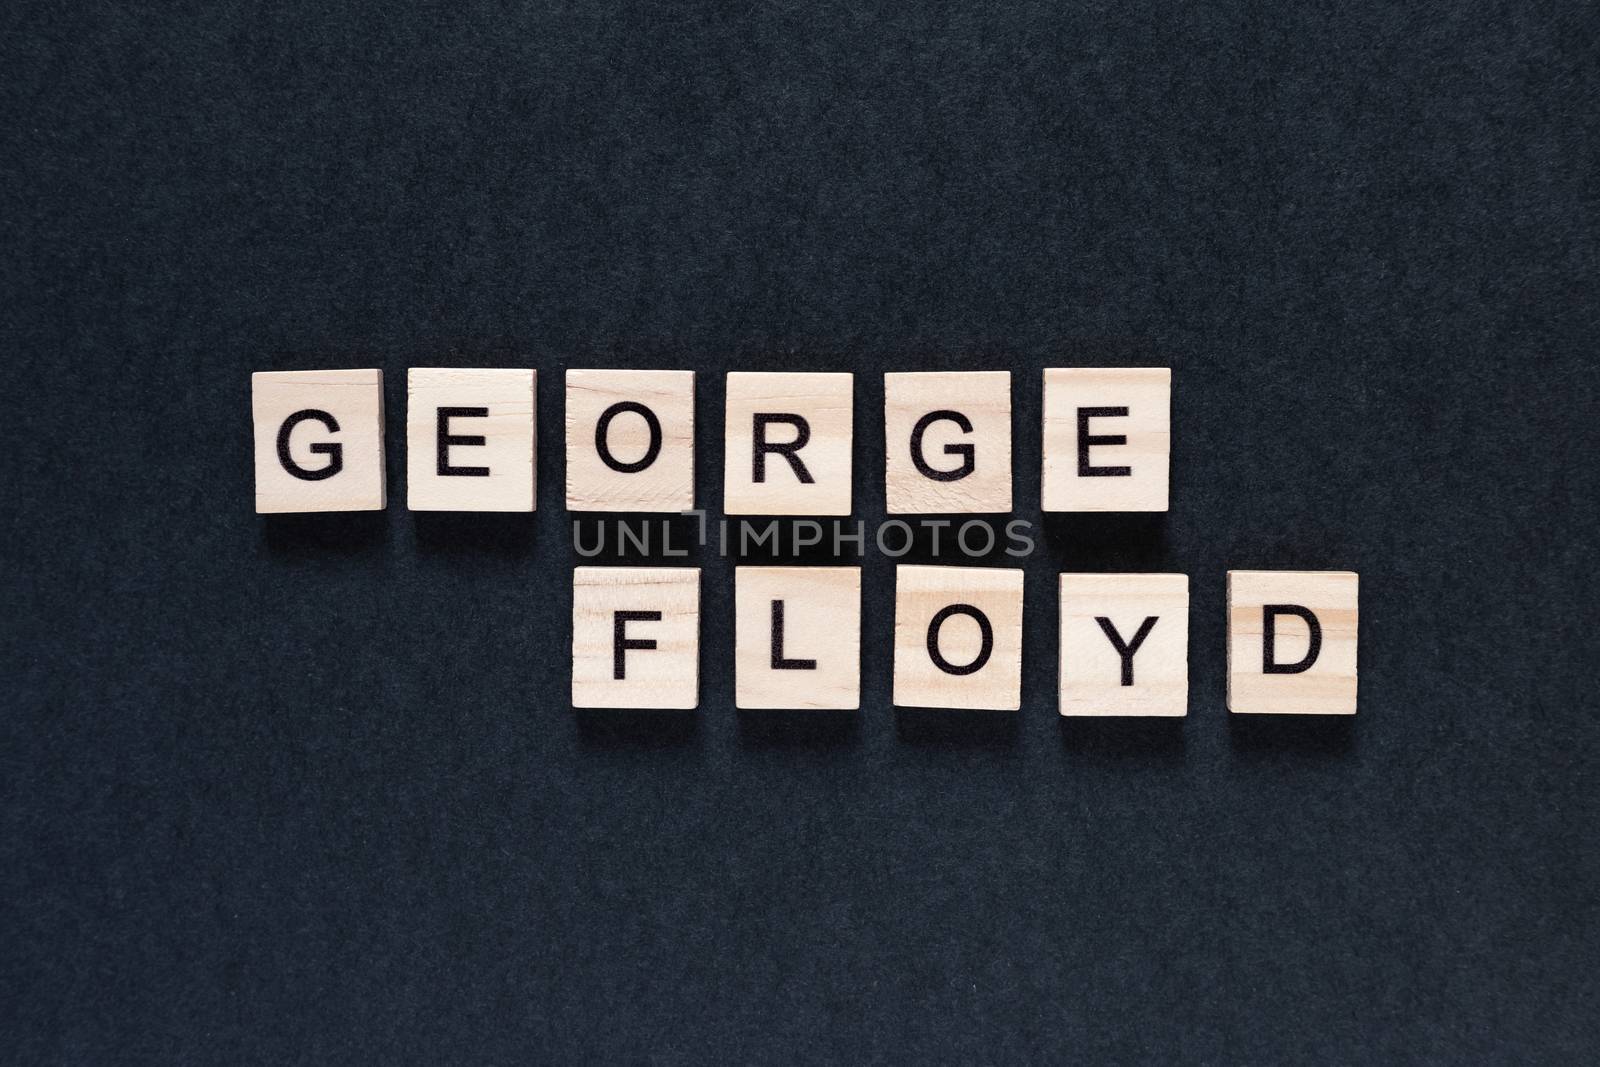 George Floyd lettering on a black background by Pirlik